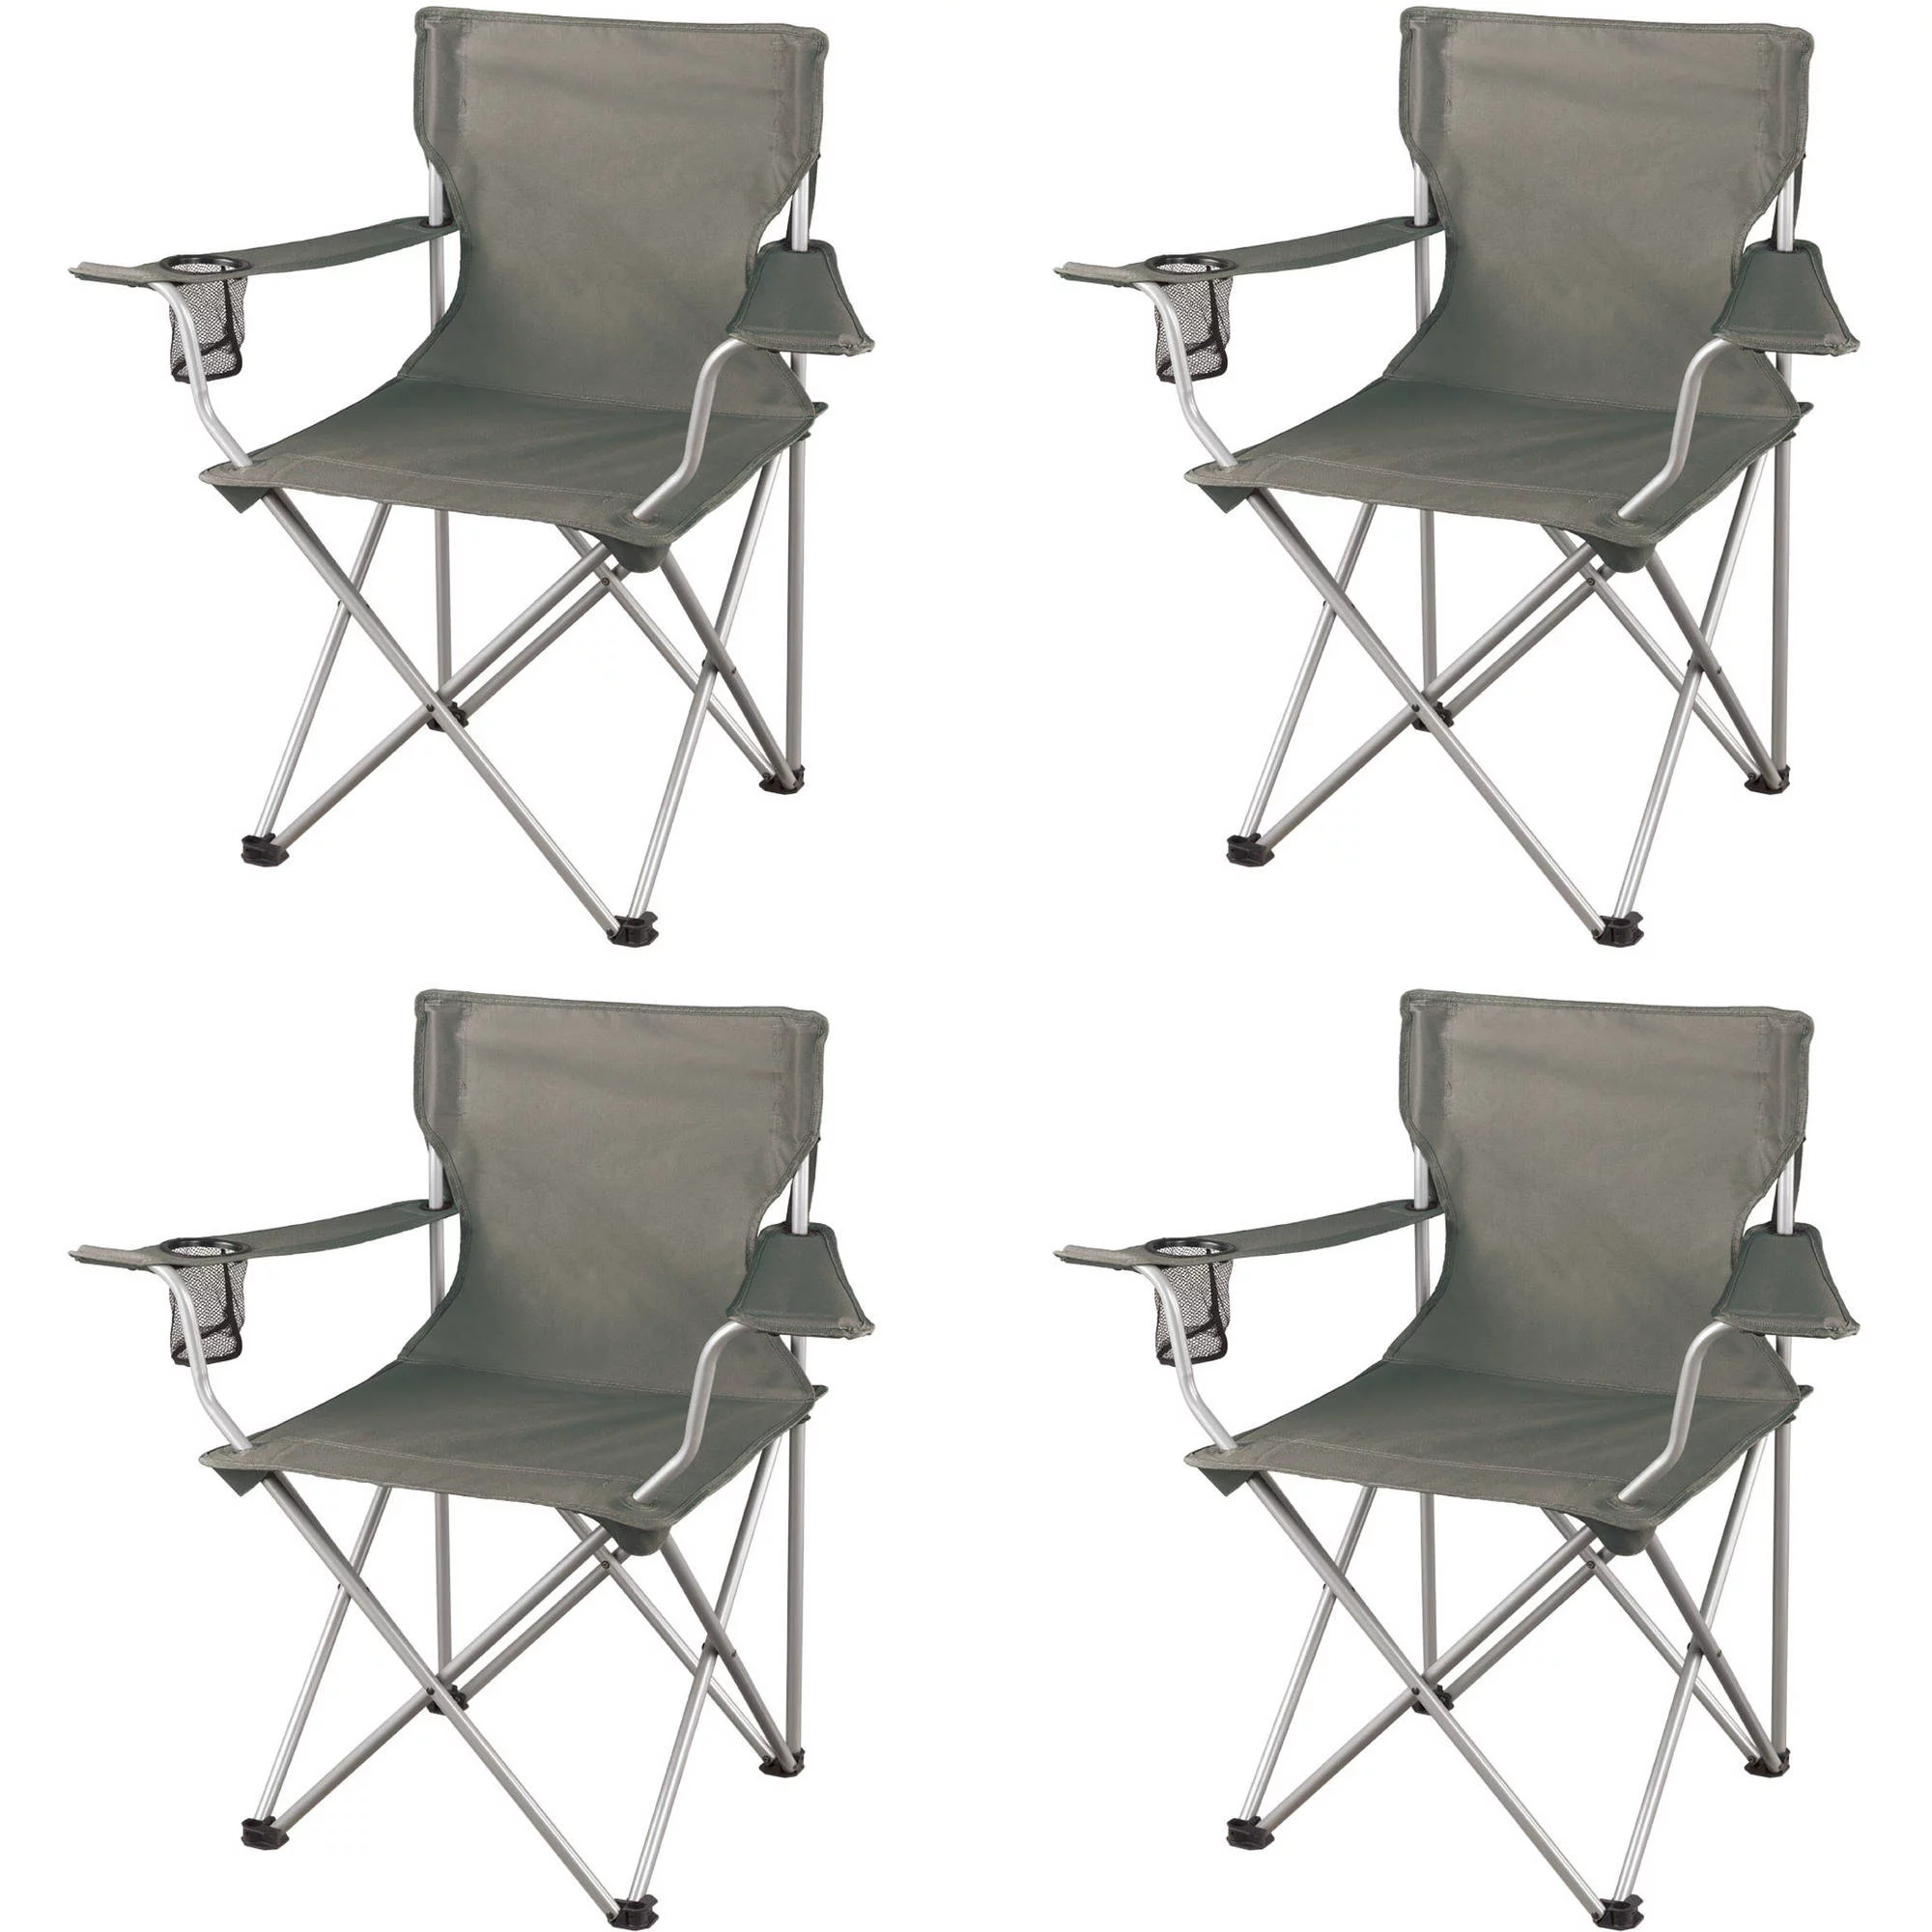 Ozark Trail Classic Folding Camp Chairs with Mesh Cup Holder Set of 4 32 10 x 19 10 x 32 10 Inches 0b72bb38 6a55 42e1 a3e9 a821fea94c25 1.bc82ade3e97b3675cbd9624a2b7ae68b